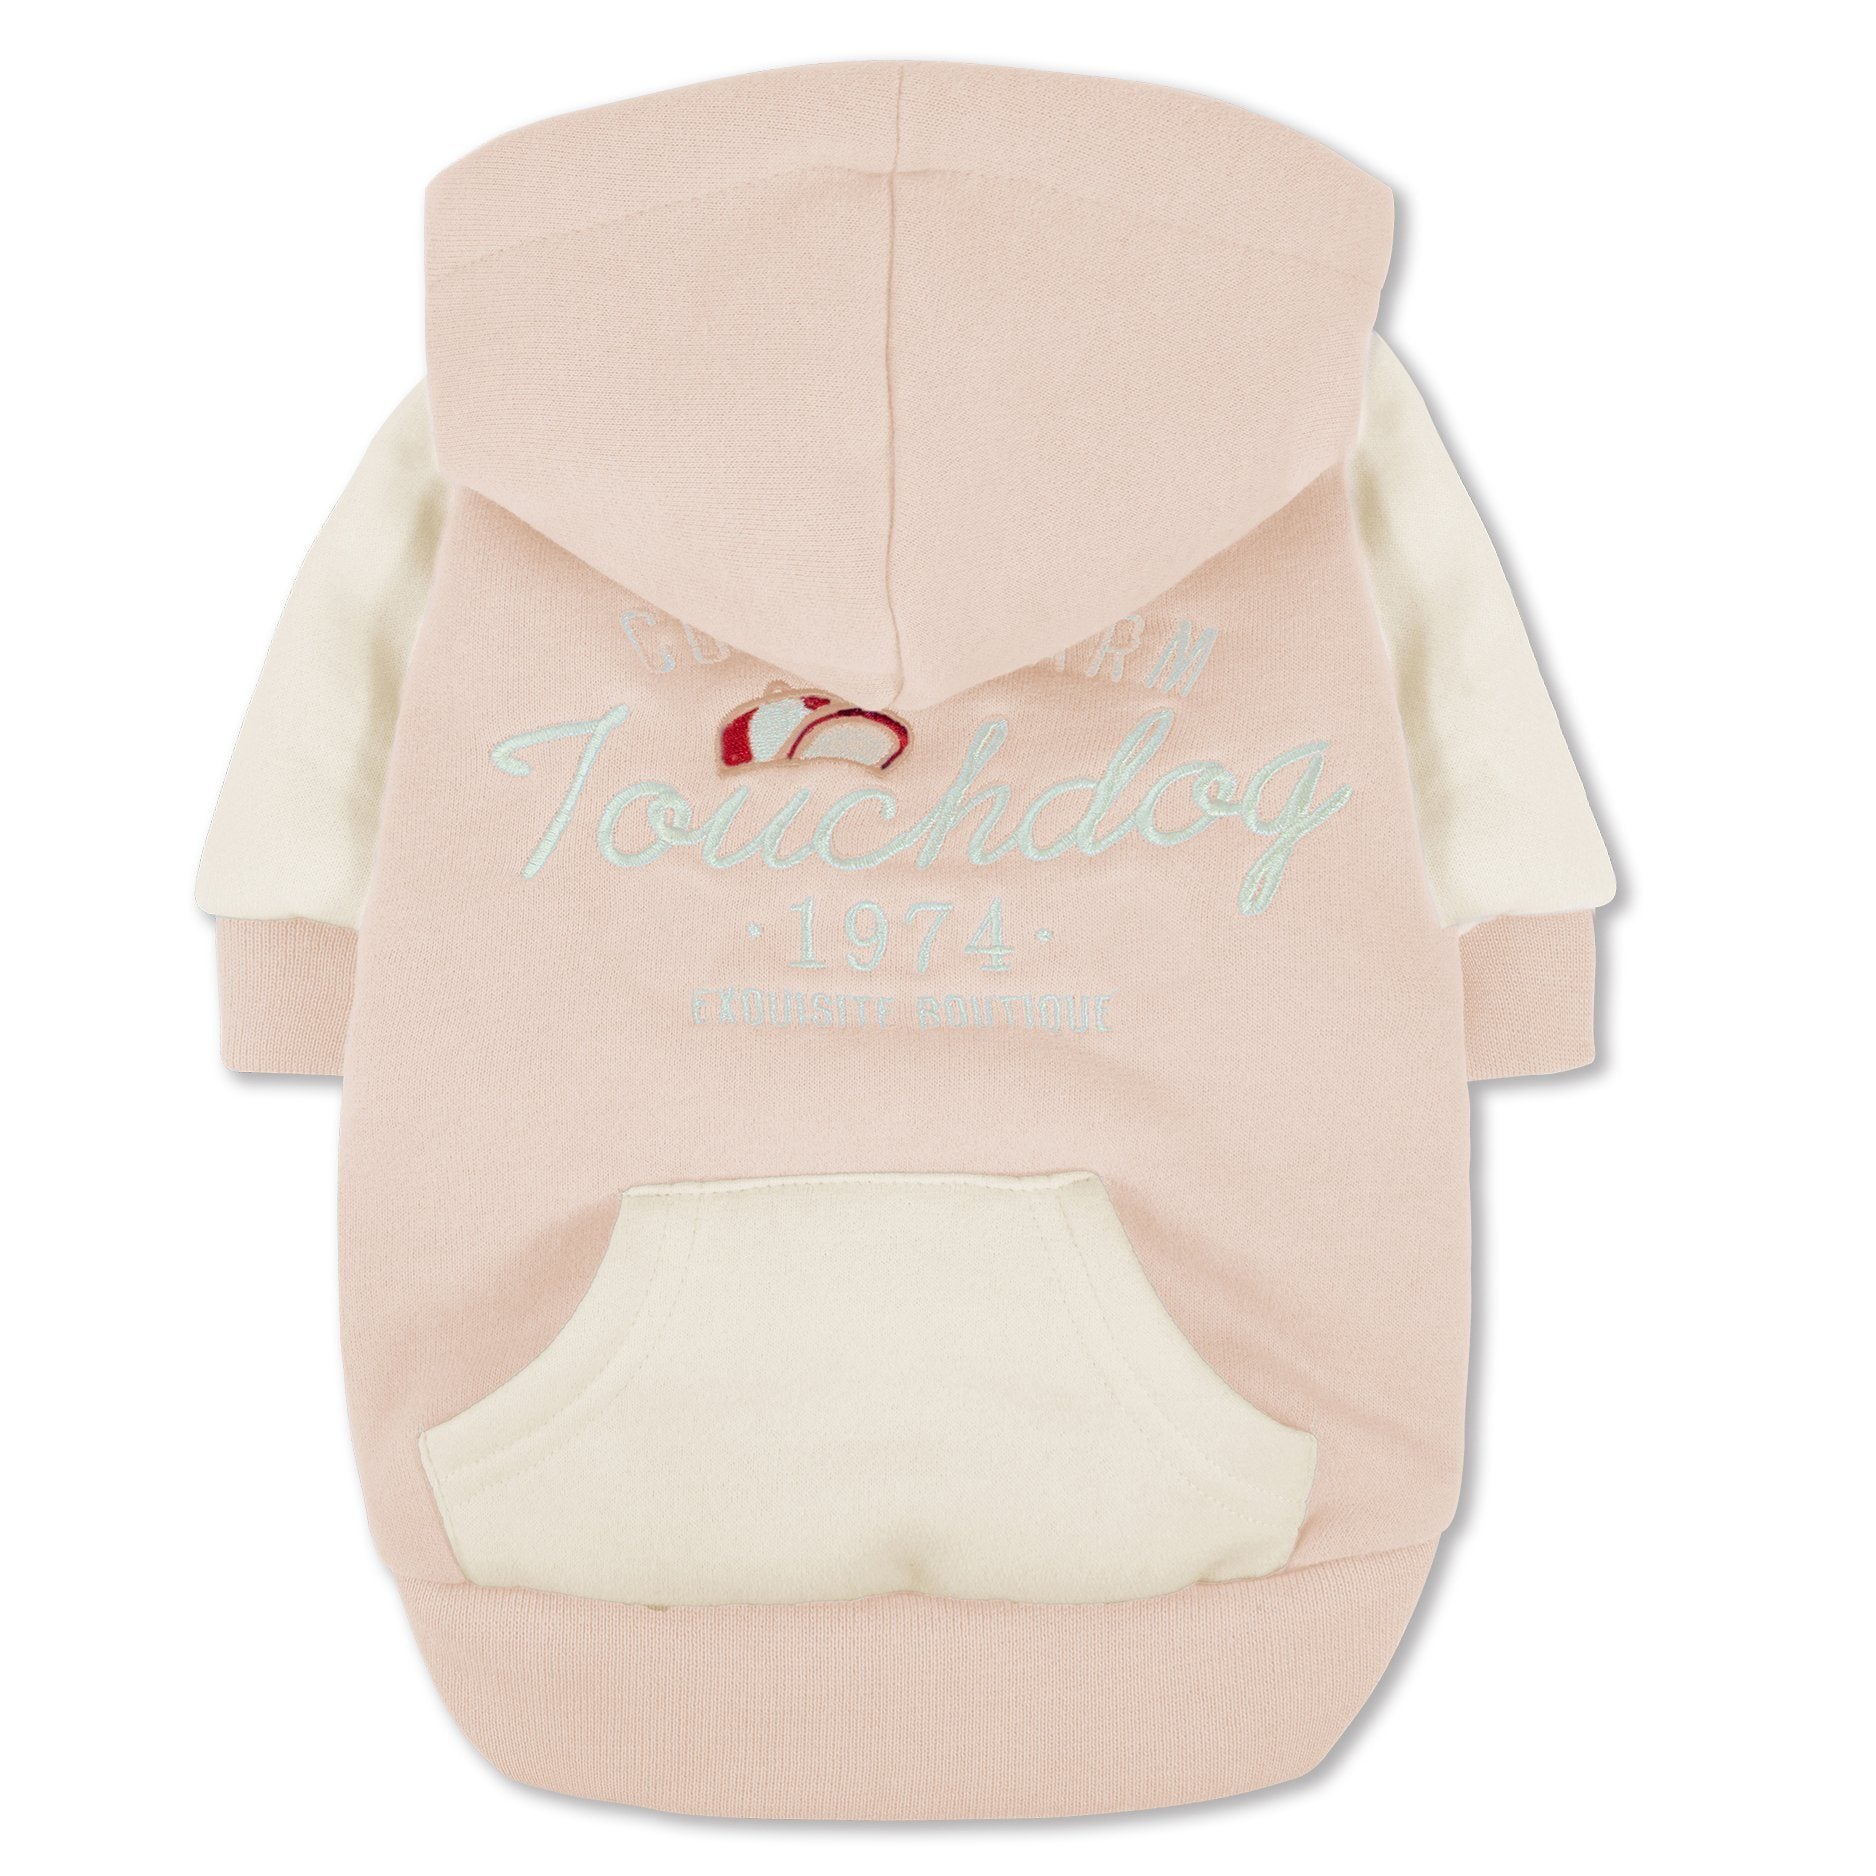 Touchdog 'Heritage' Soft-Cotton Fashion Dog Hoodie Sweater X-Small Pink